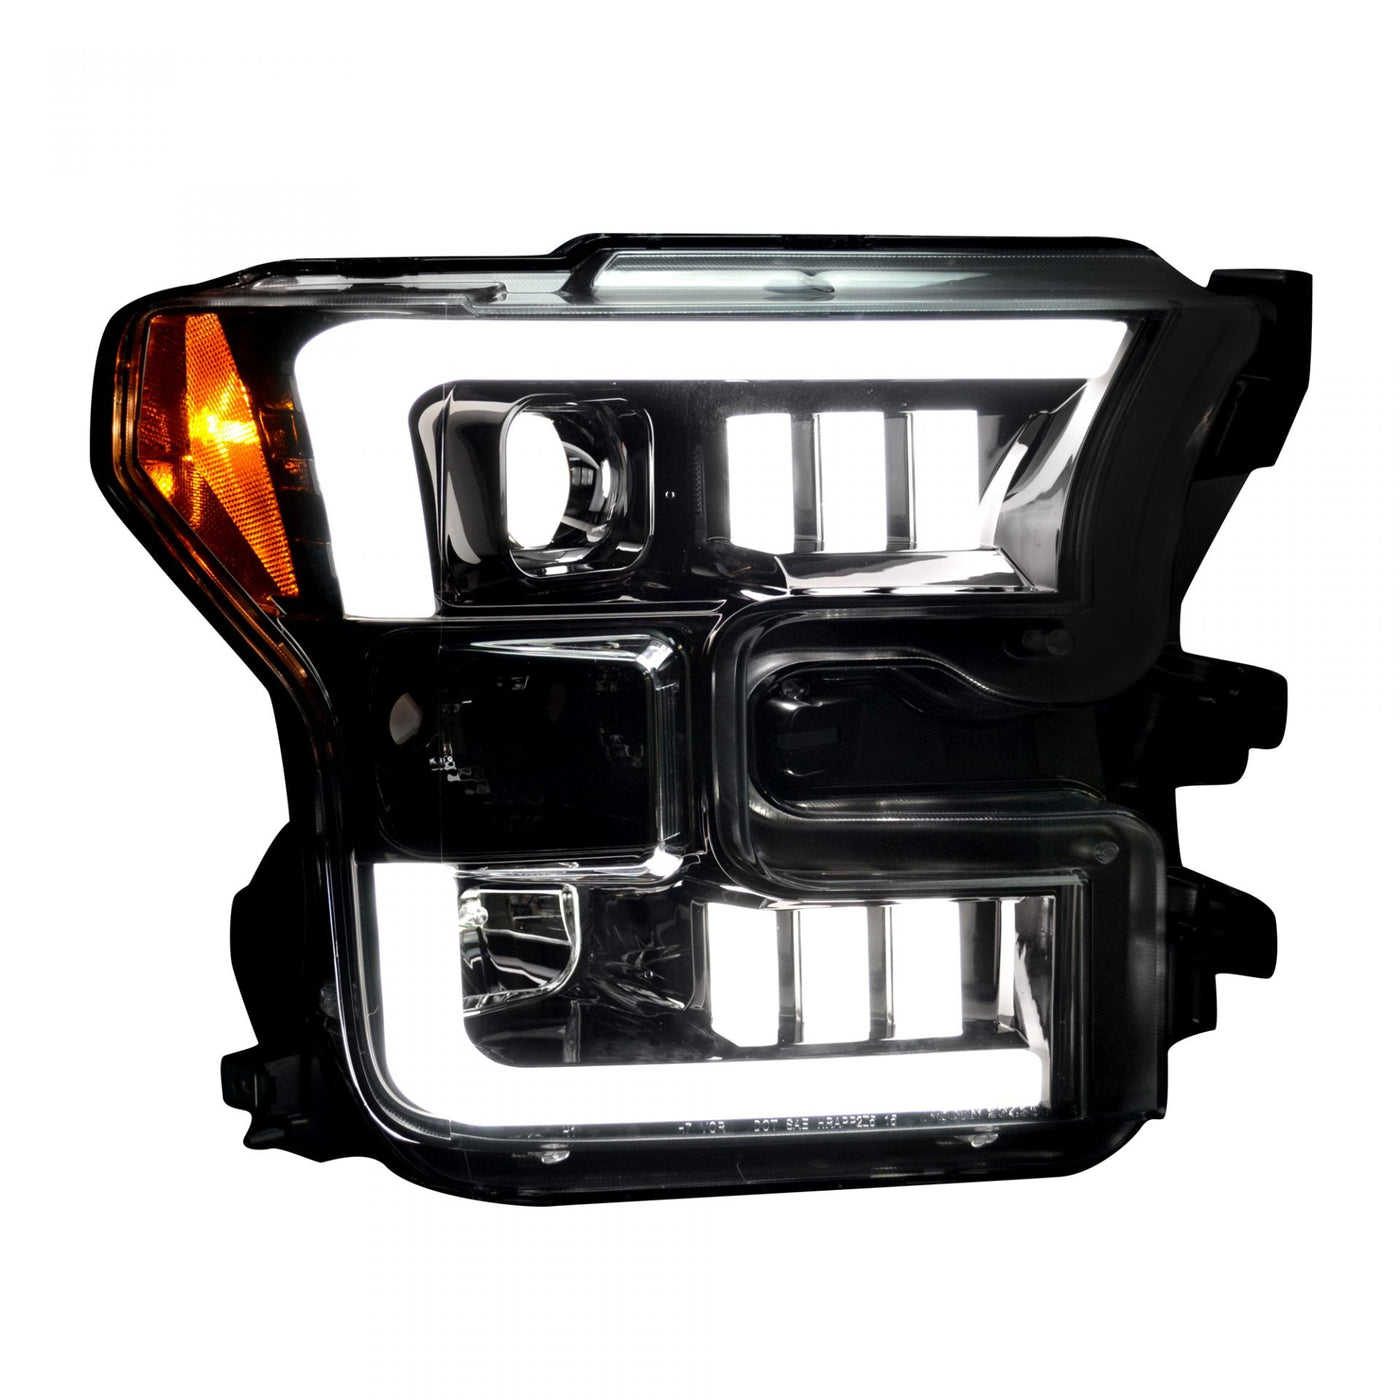 Ford Projector Headlights, Ford F150 Headlights, Ford 15-17 Headlights, Smoked/Black Headlights, Recon Projector Headlights, Projector Headlights